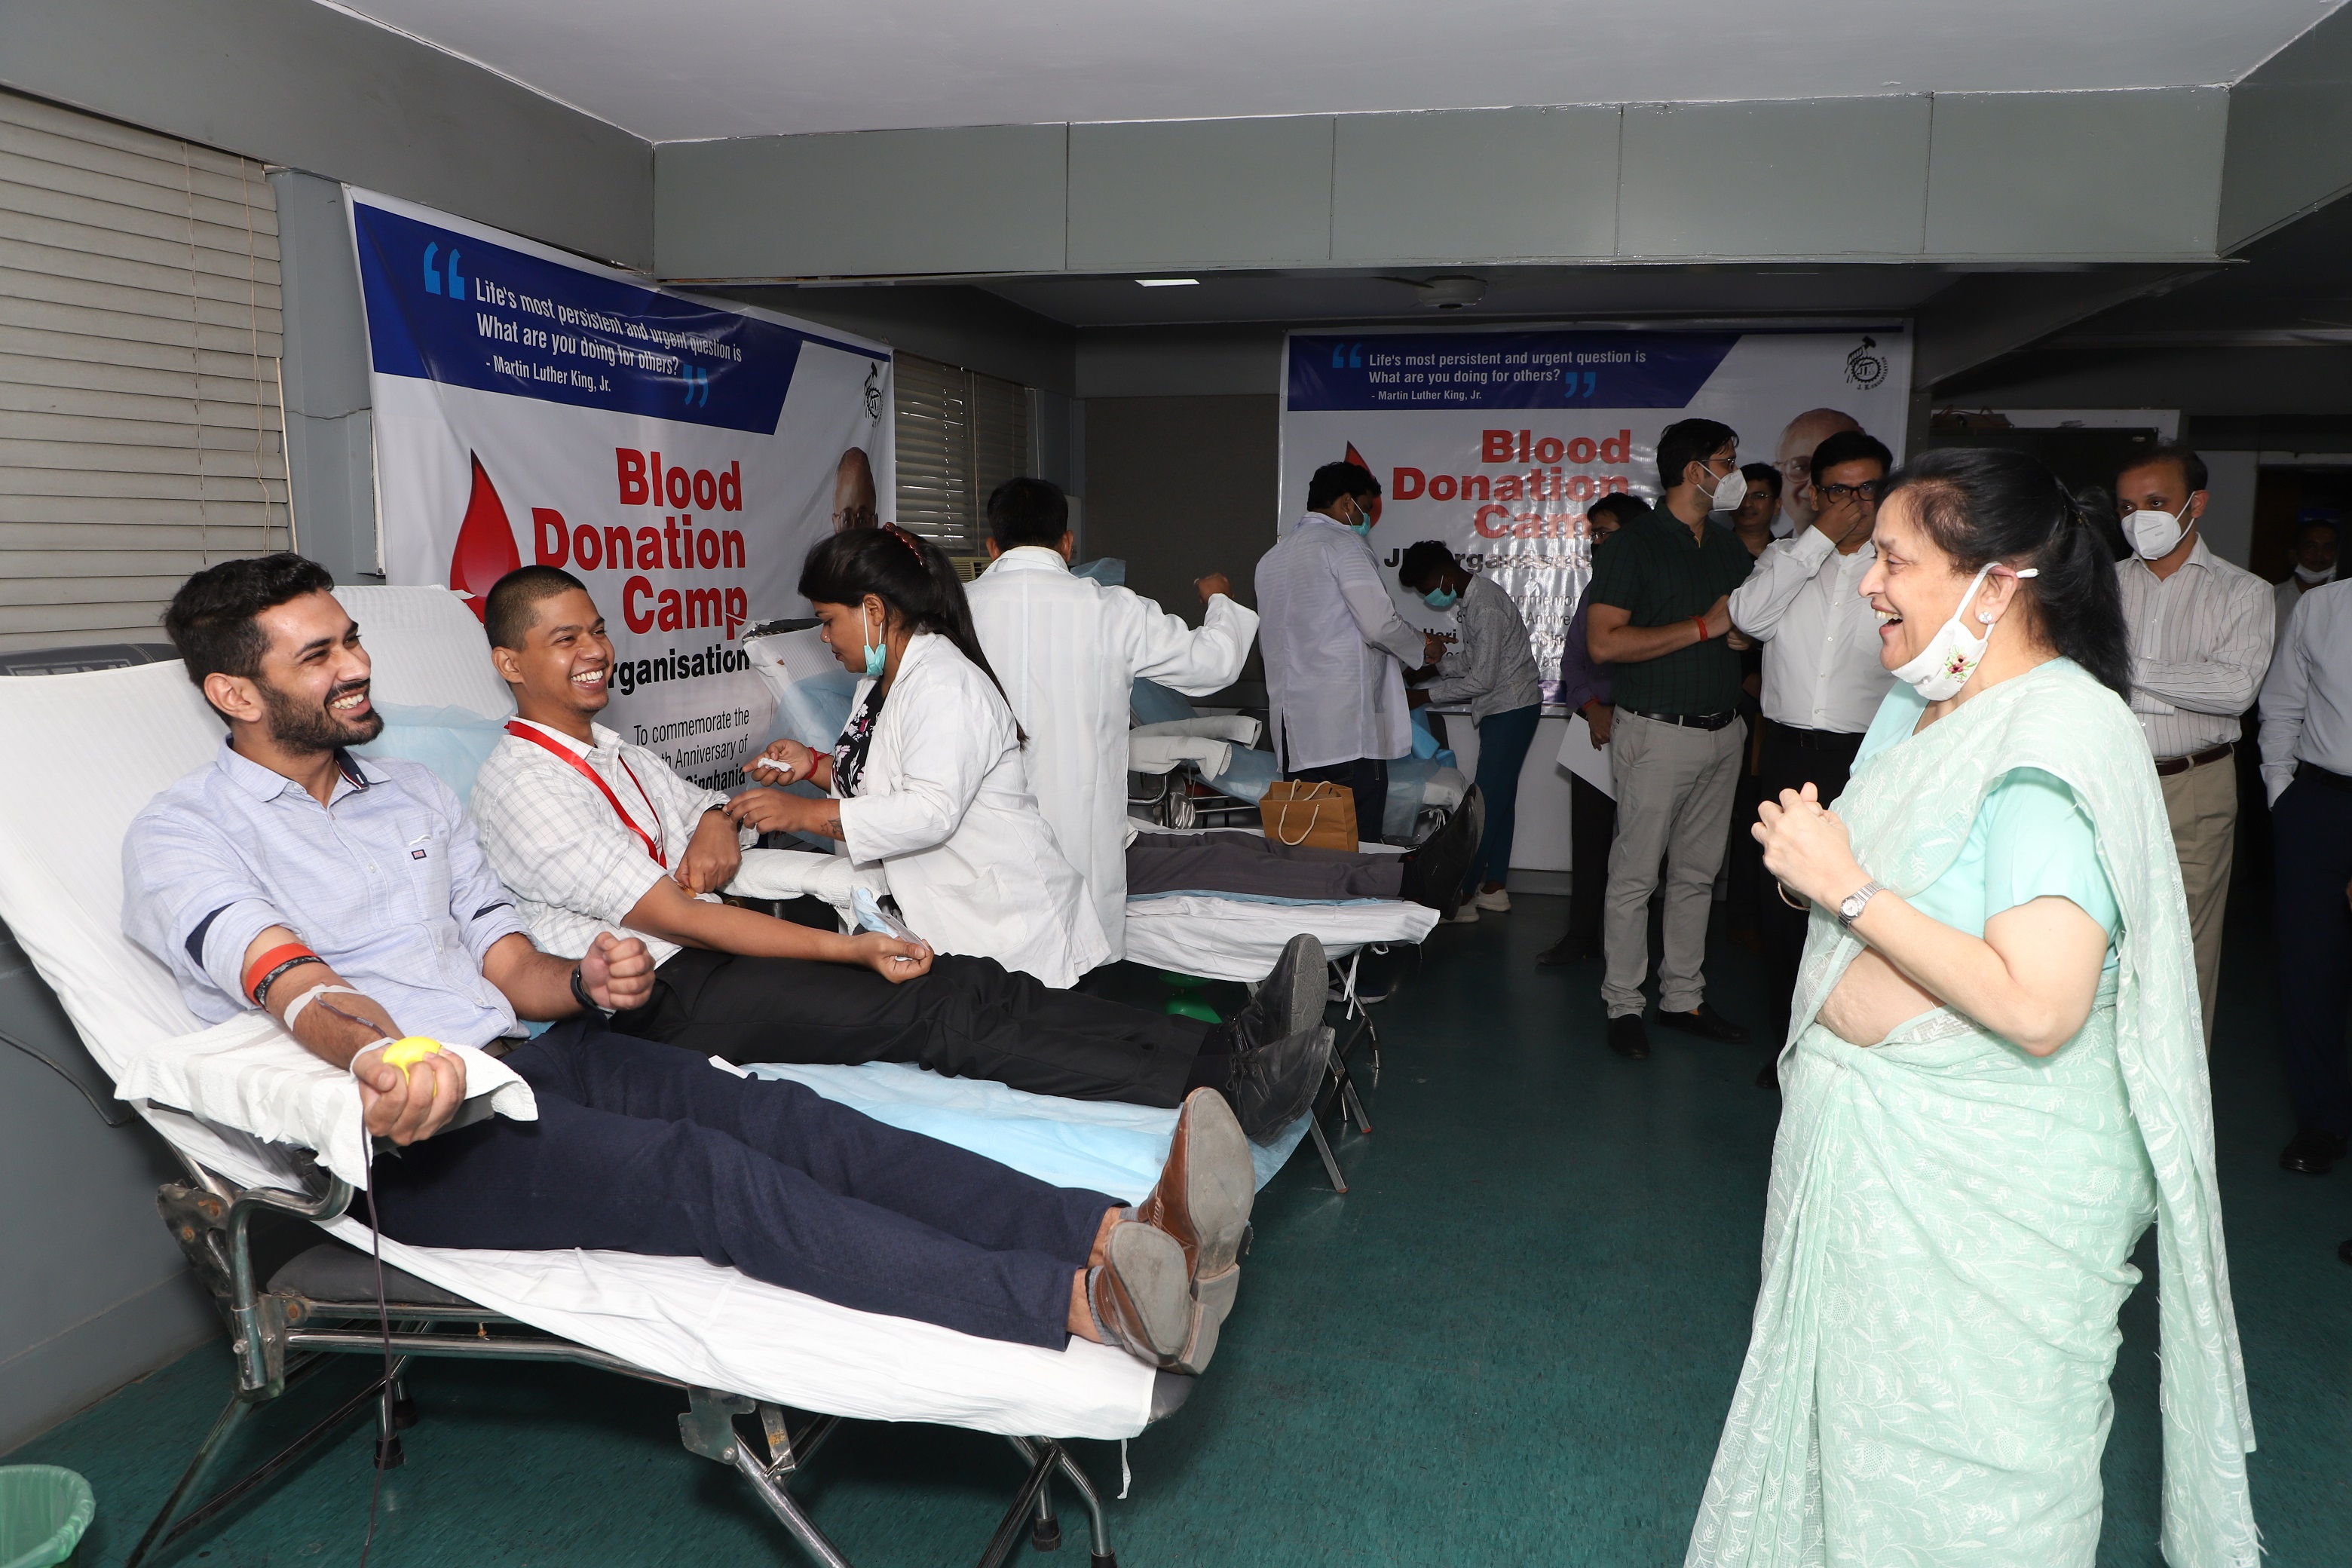 JK Organisation organizes Blood Donation Camps